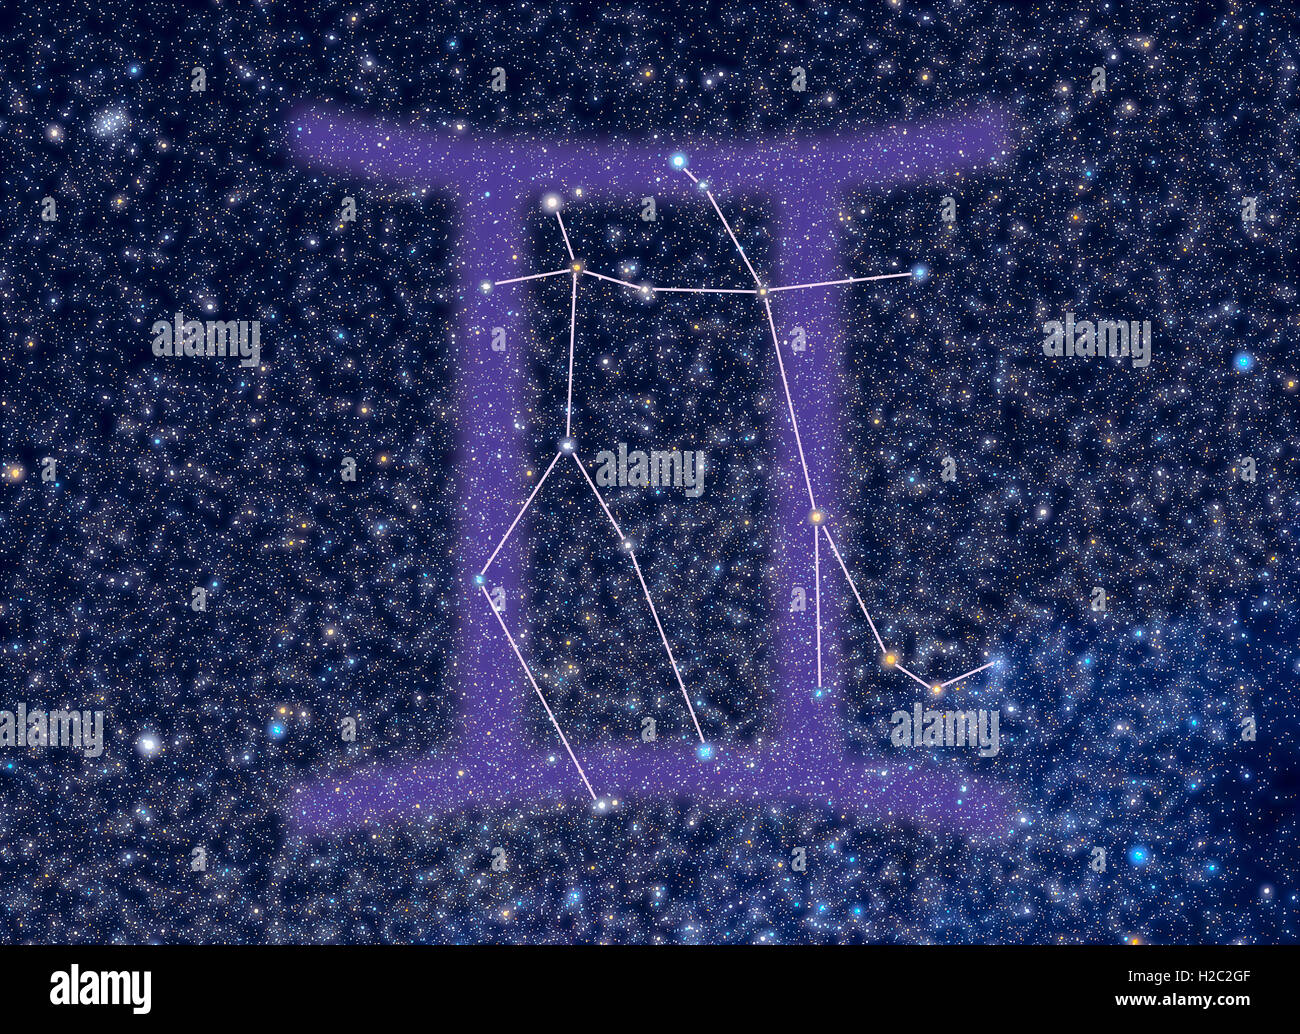 1822 ASTROLOGY ATLAS poster constellation Gemini 16 